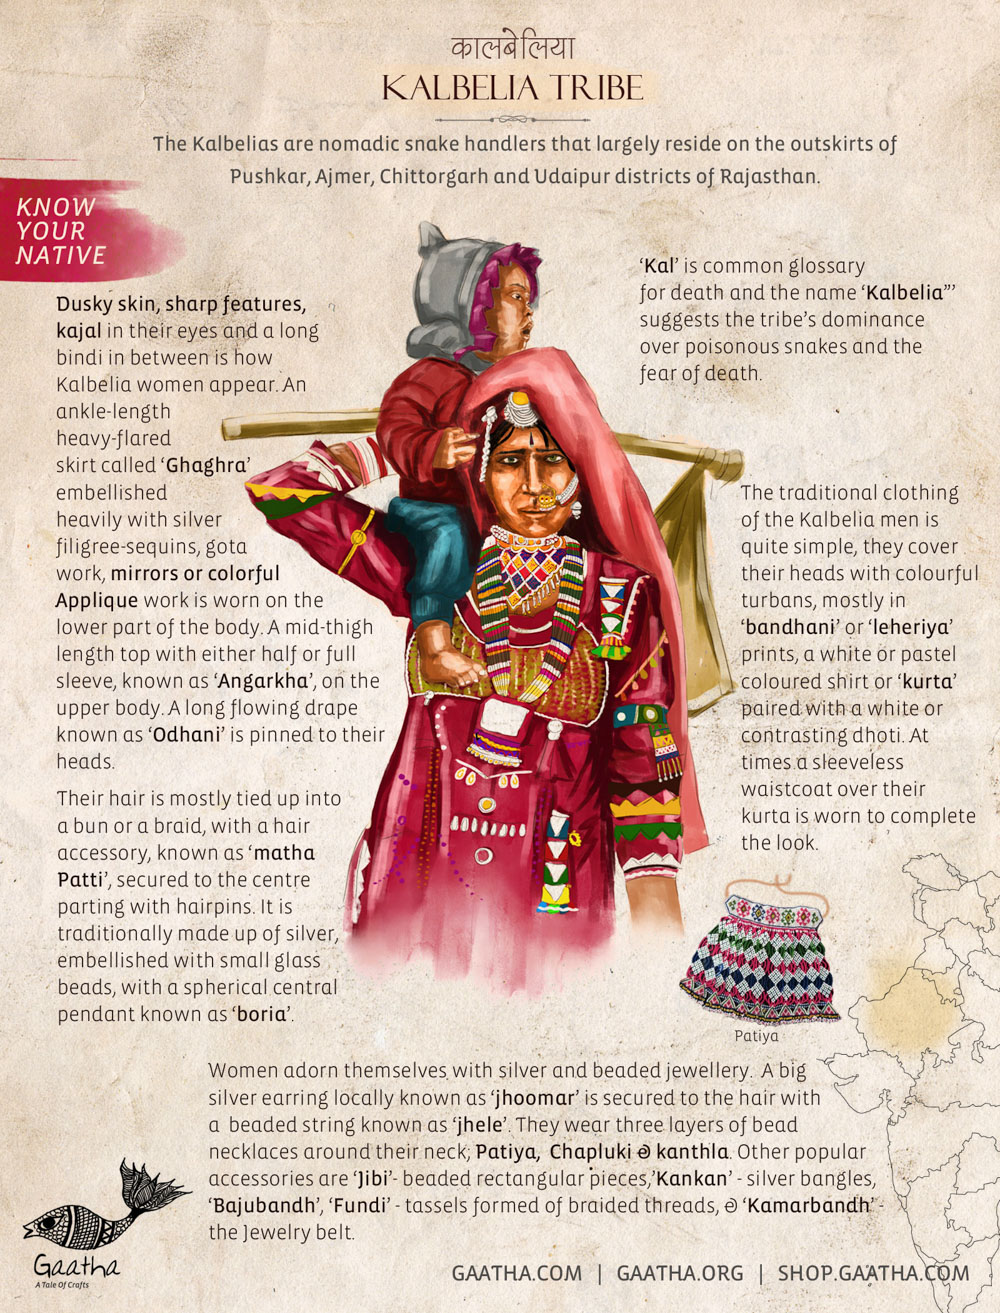 The Kalbelia Tribe are Nomadic snake handlers residing in outskirts of Rajasthan.